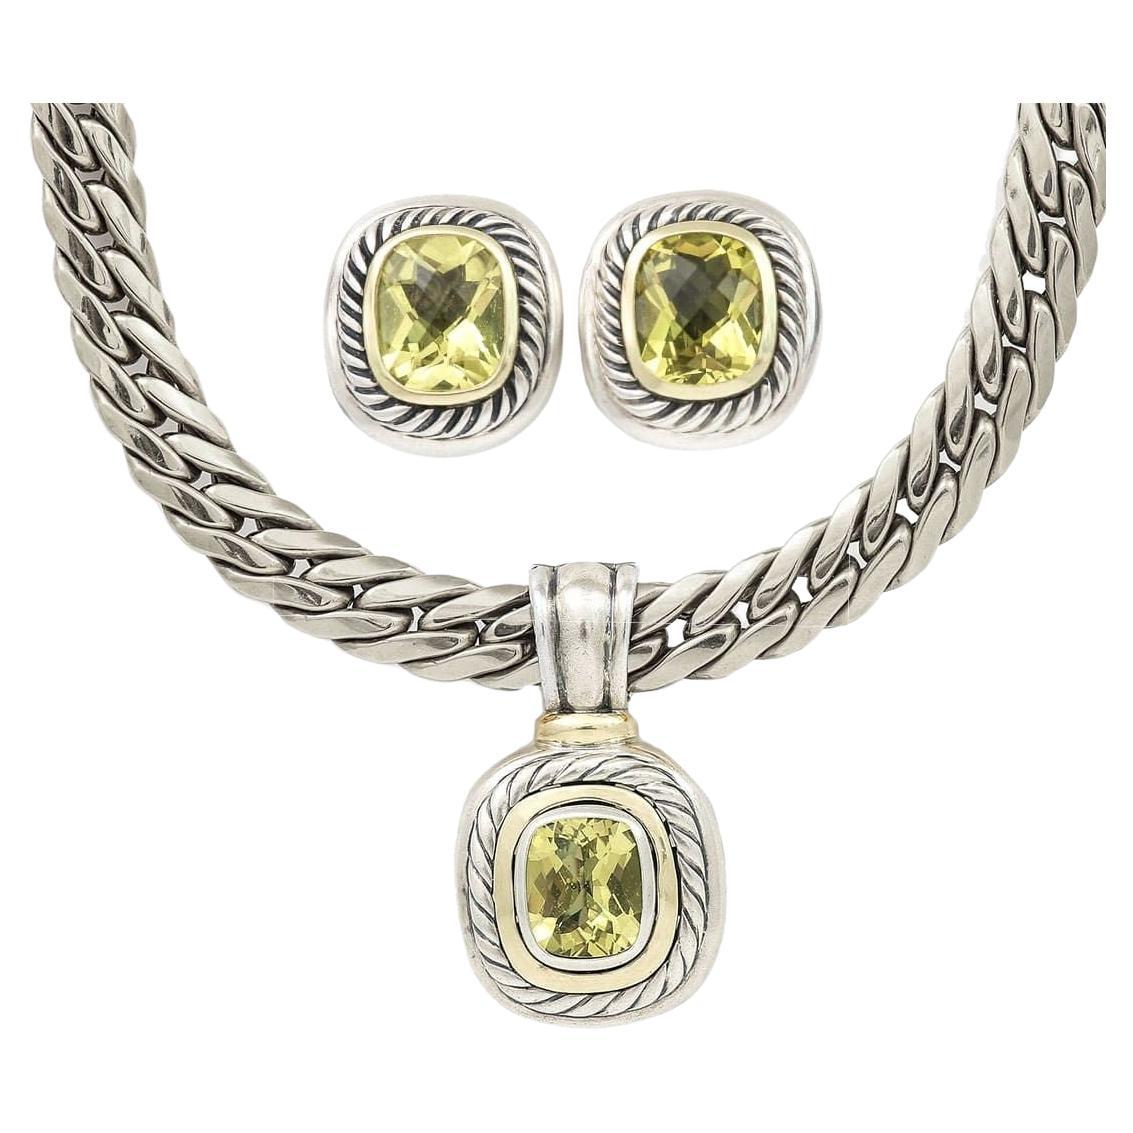 Vintage David Yurman 14k Gold and Silver ‘Albion’ Peridot Pendant and Earrings